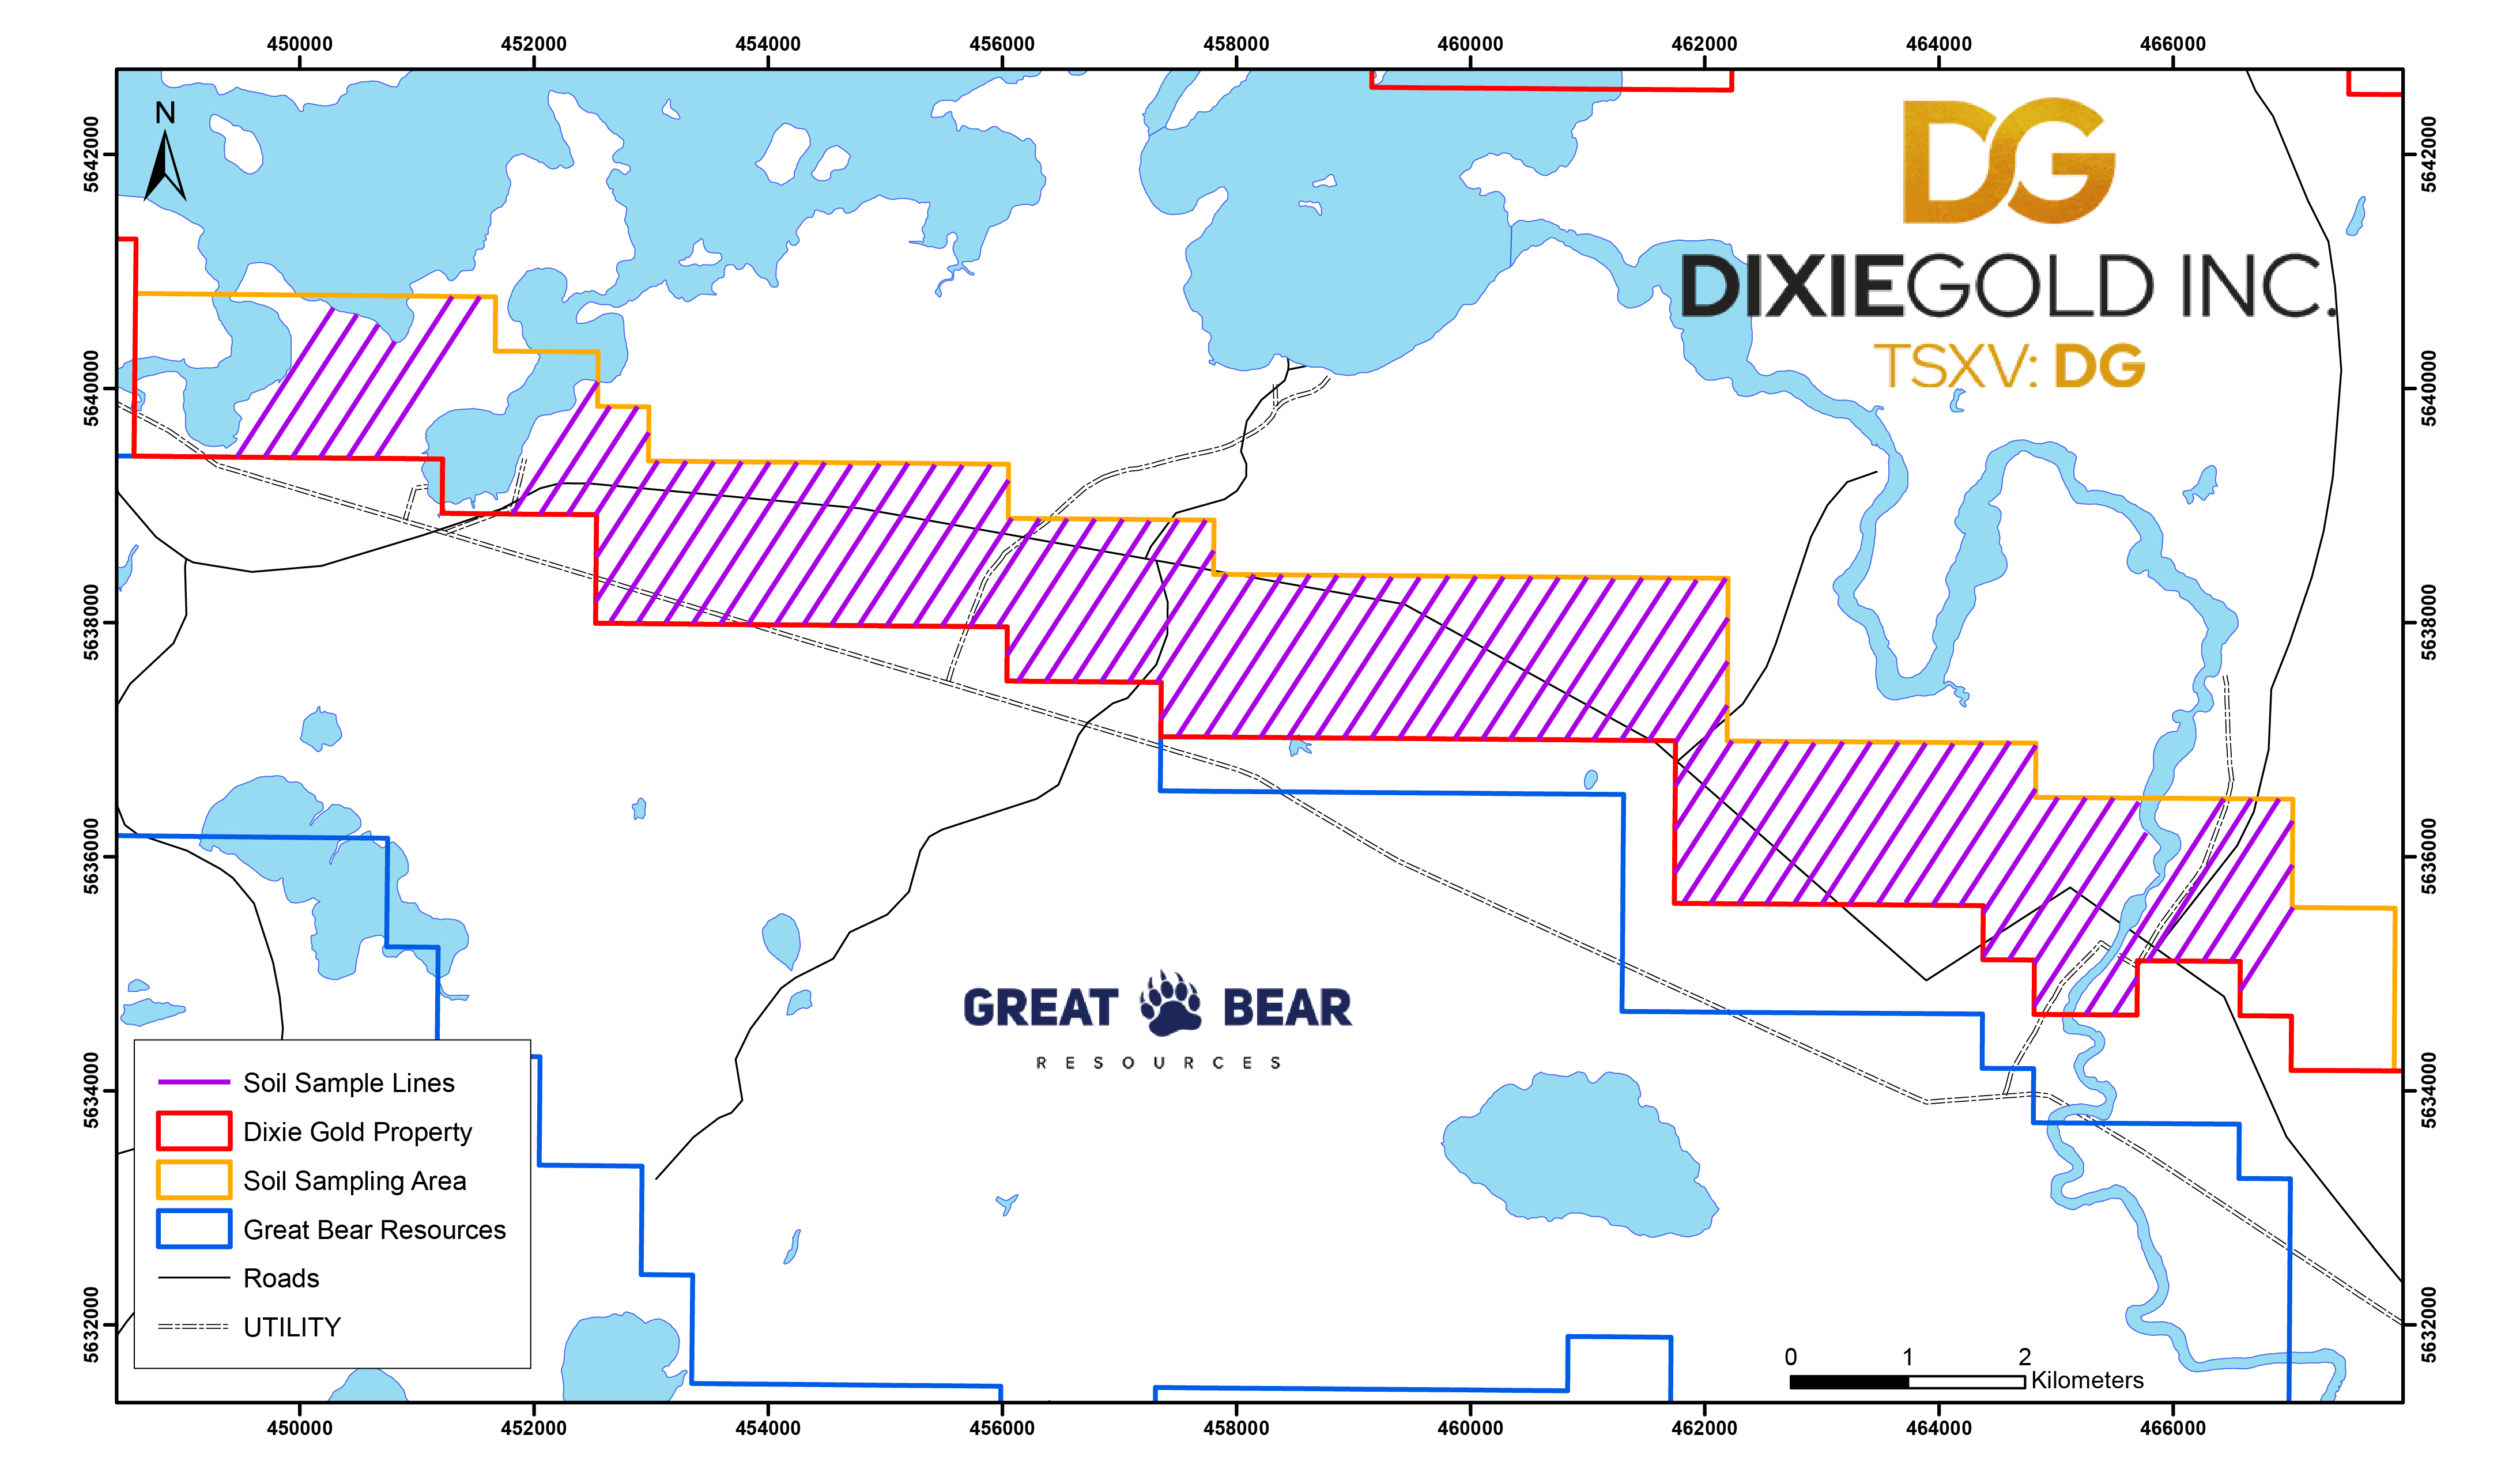 Figure 2: Dixie Gold Inc. - Fall 2020 SGH Soil Sampling Program Area